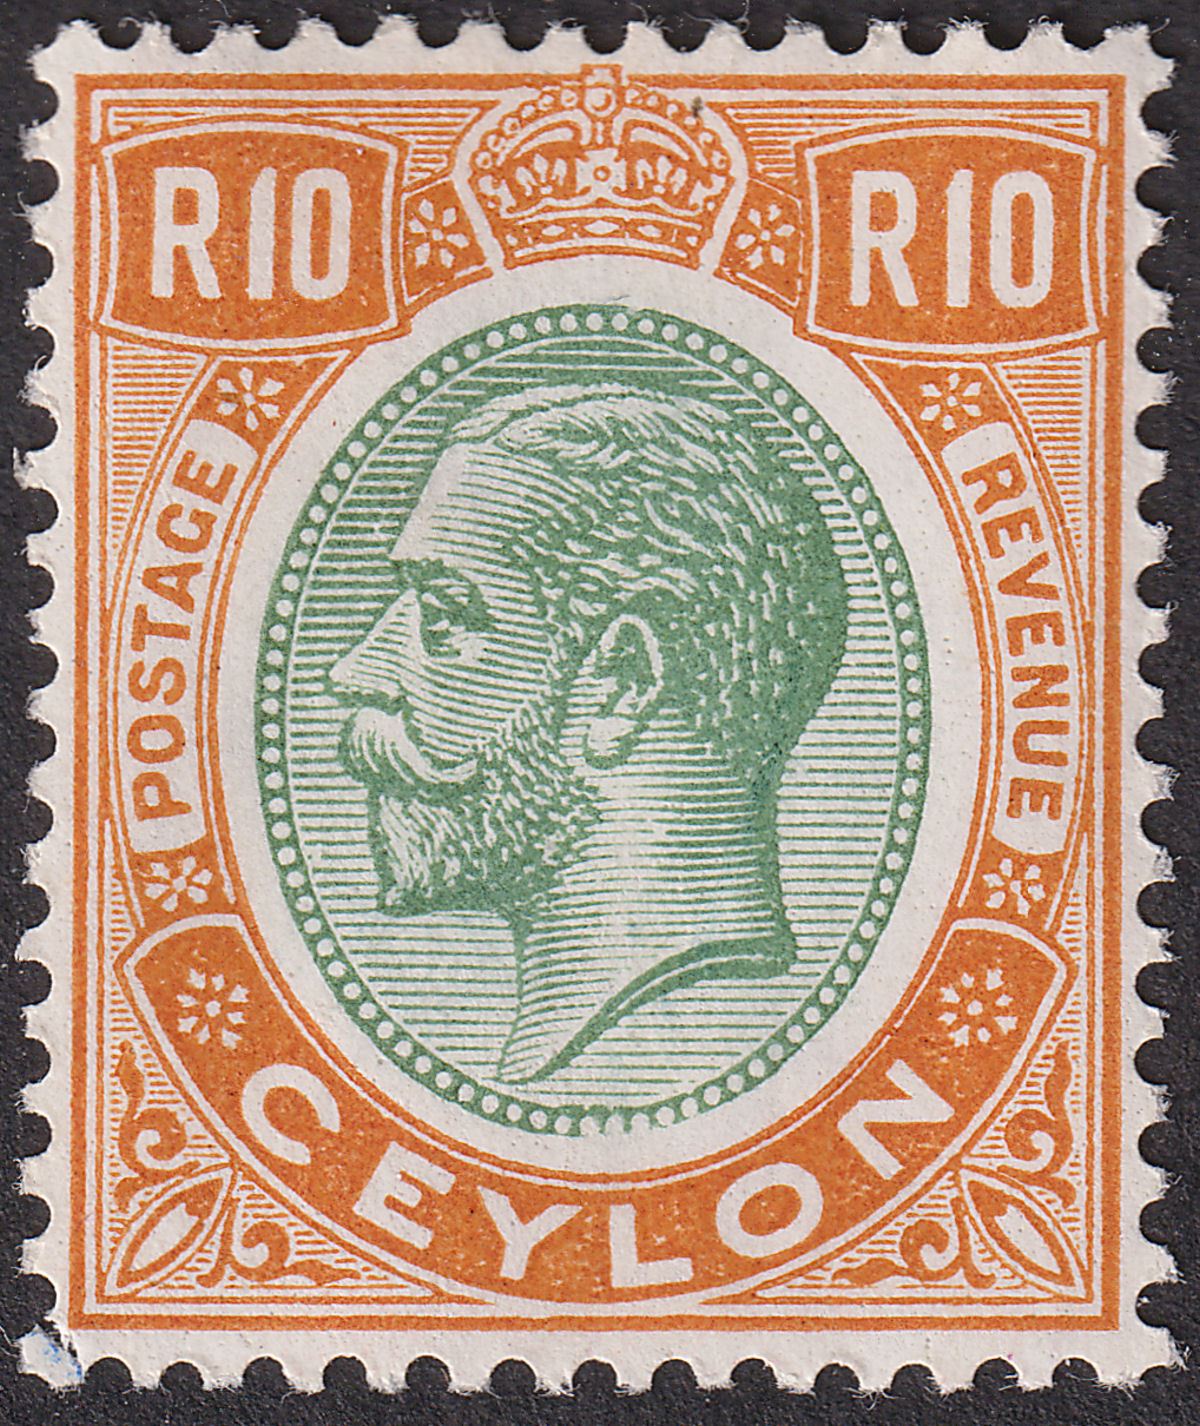 Ceylon 1927 KGV 10r Green and Brown-Orange Mint SG366 cat £70 corner perf fault